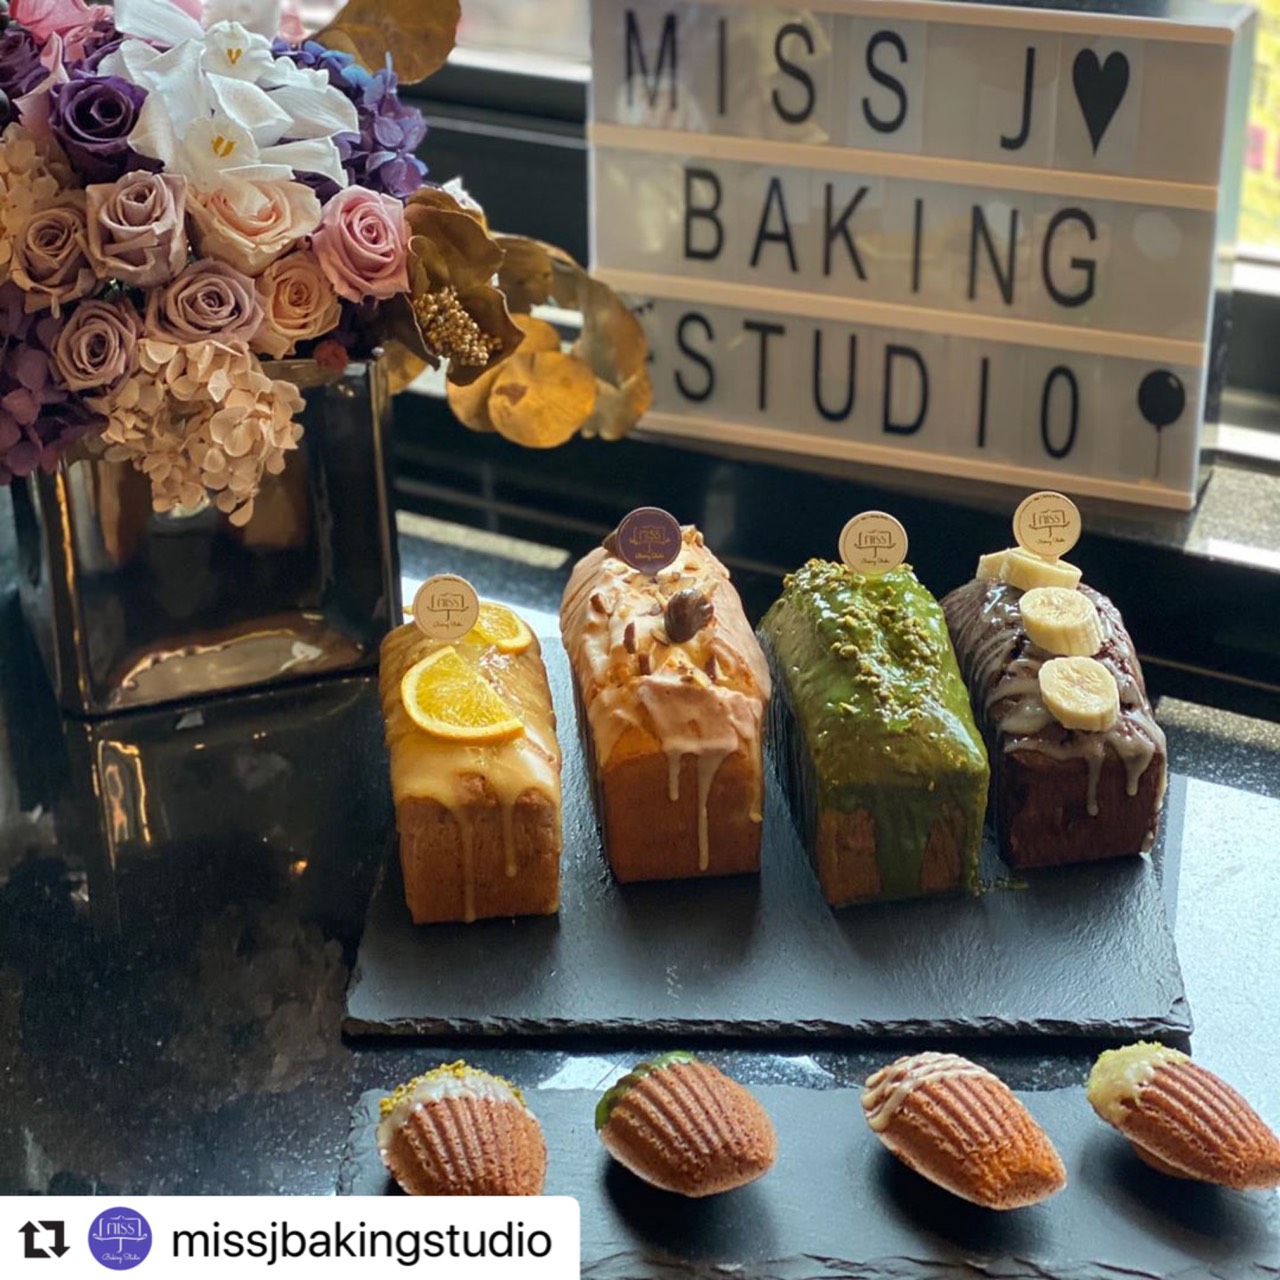 Miss J Baking Studio